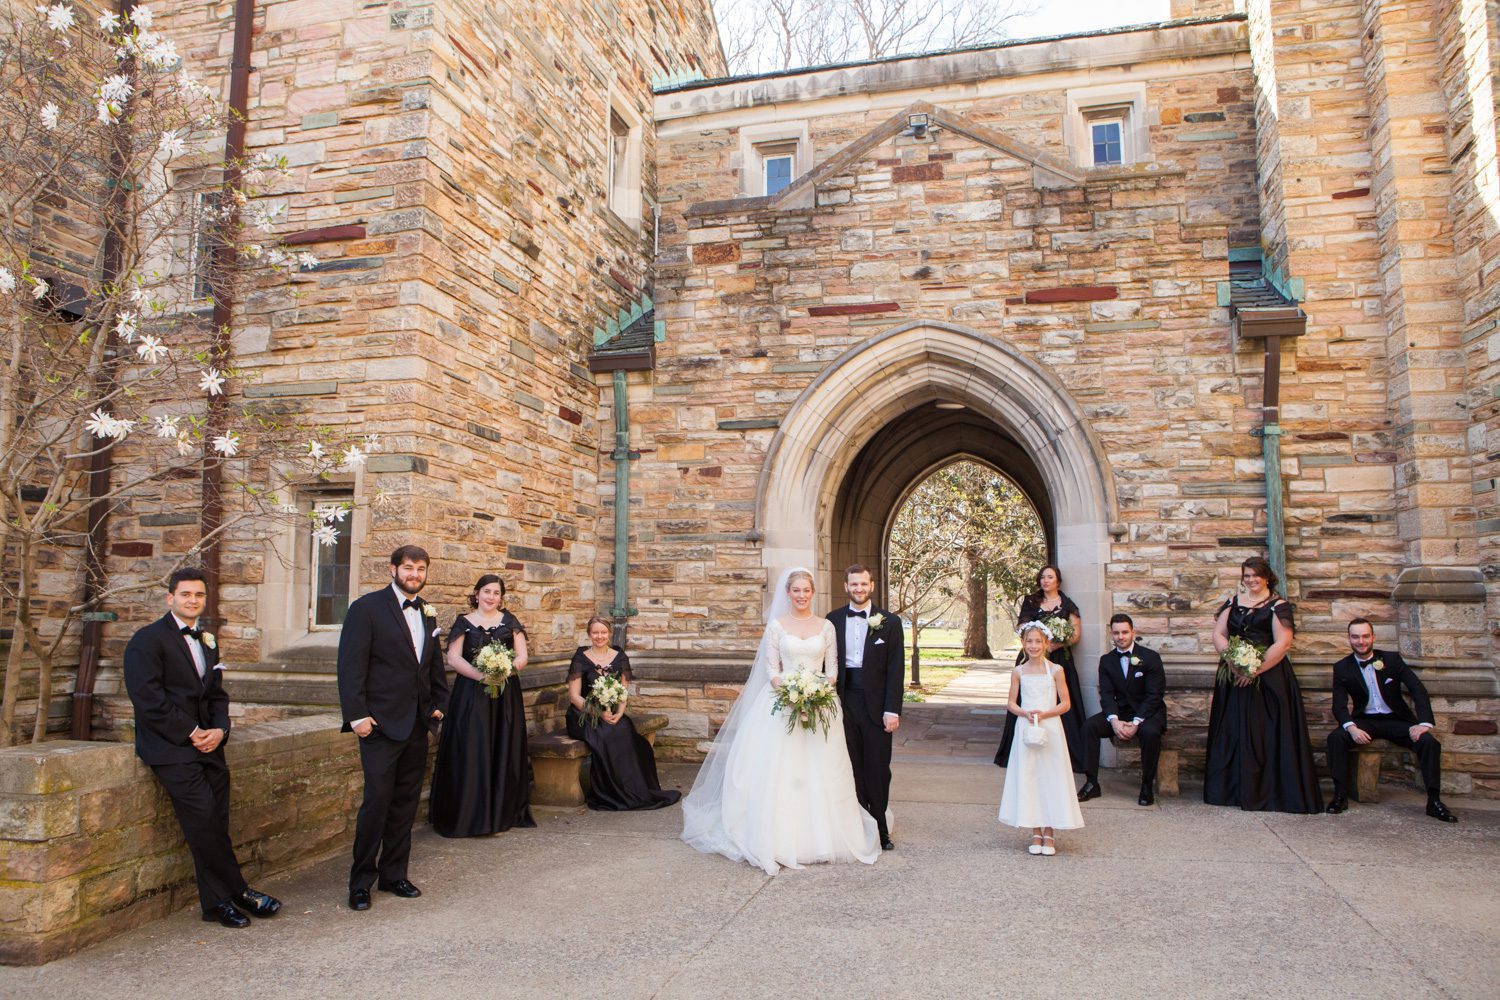 Bridal party after wedding at Wightman Chapel Scarritt Bennett Nashville TN / Krista Lee Photography 